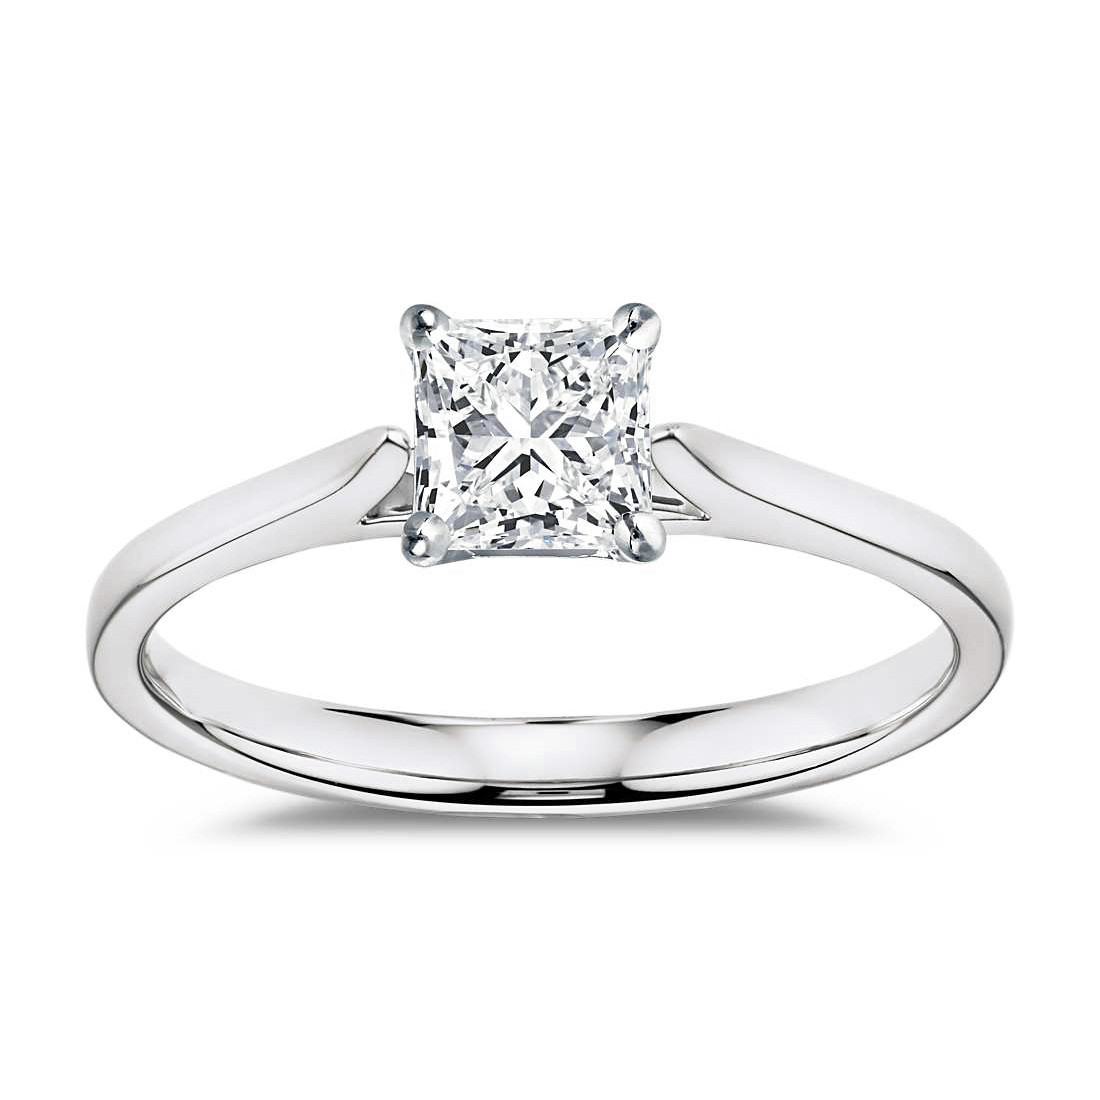 Princess Cut Solitaire Engagement Ring
 14k White Gold Certified Princess Cut Diamond Solitaire